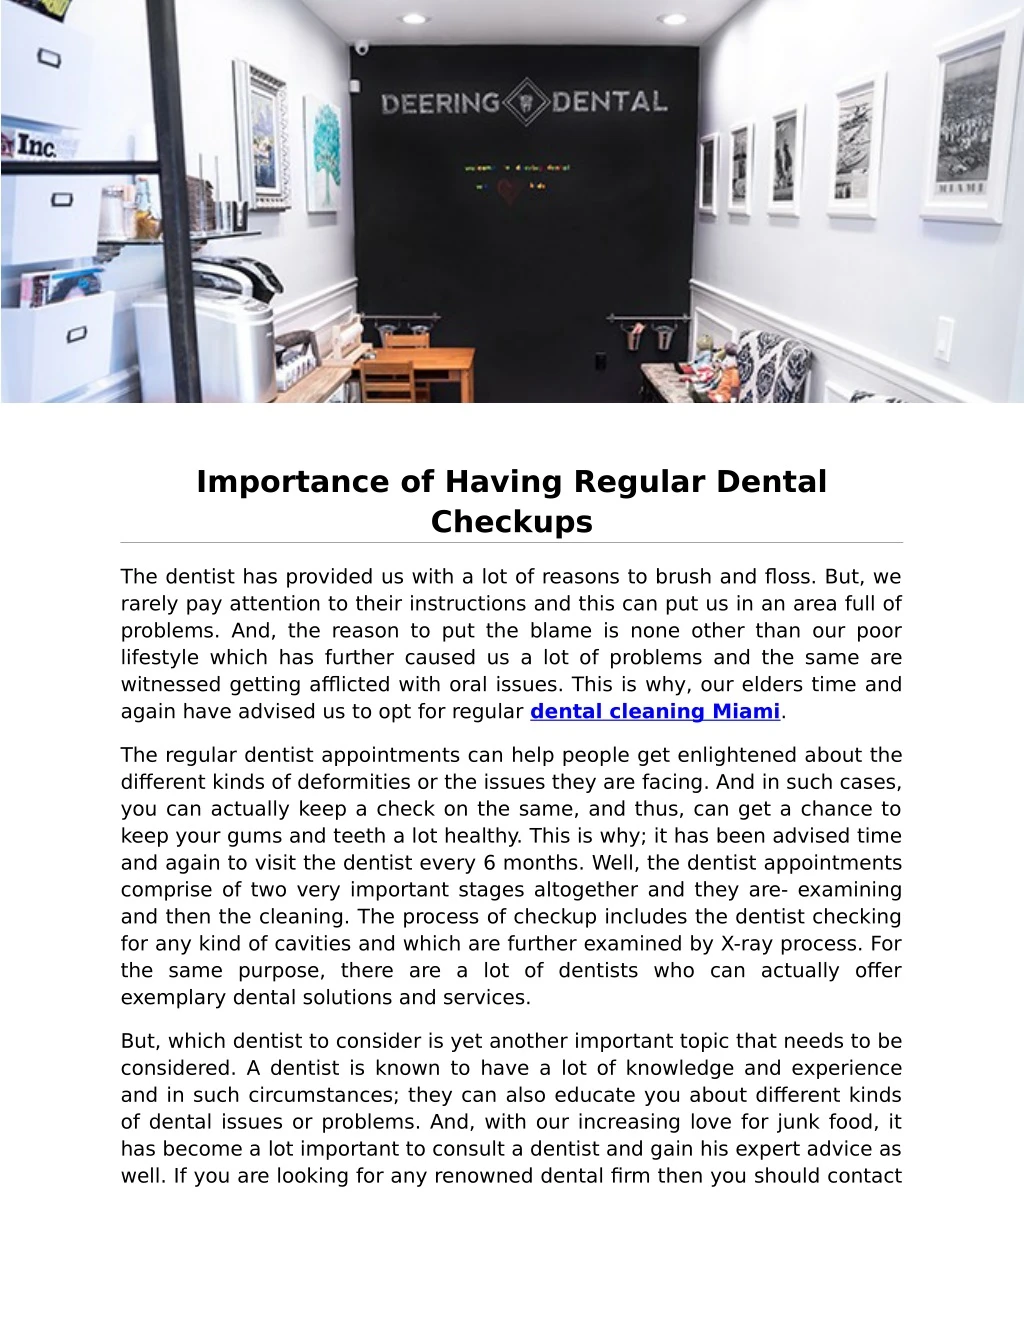 importance of having regular dental checkups